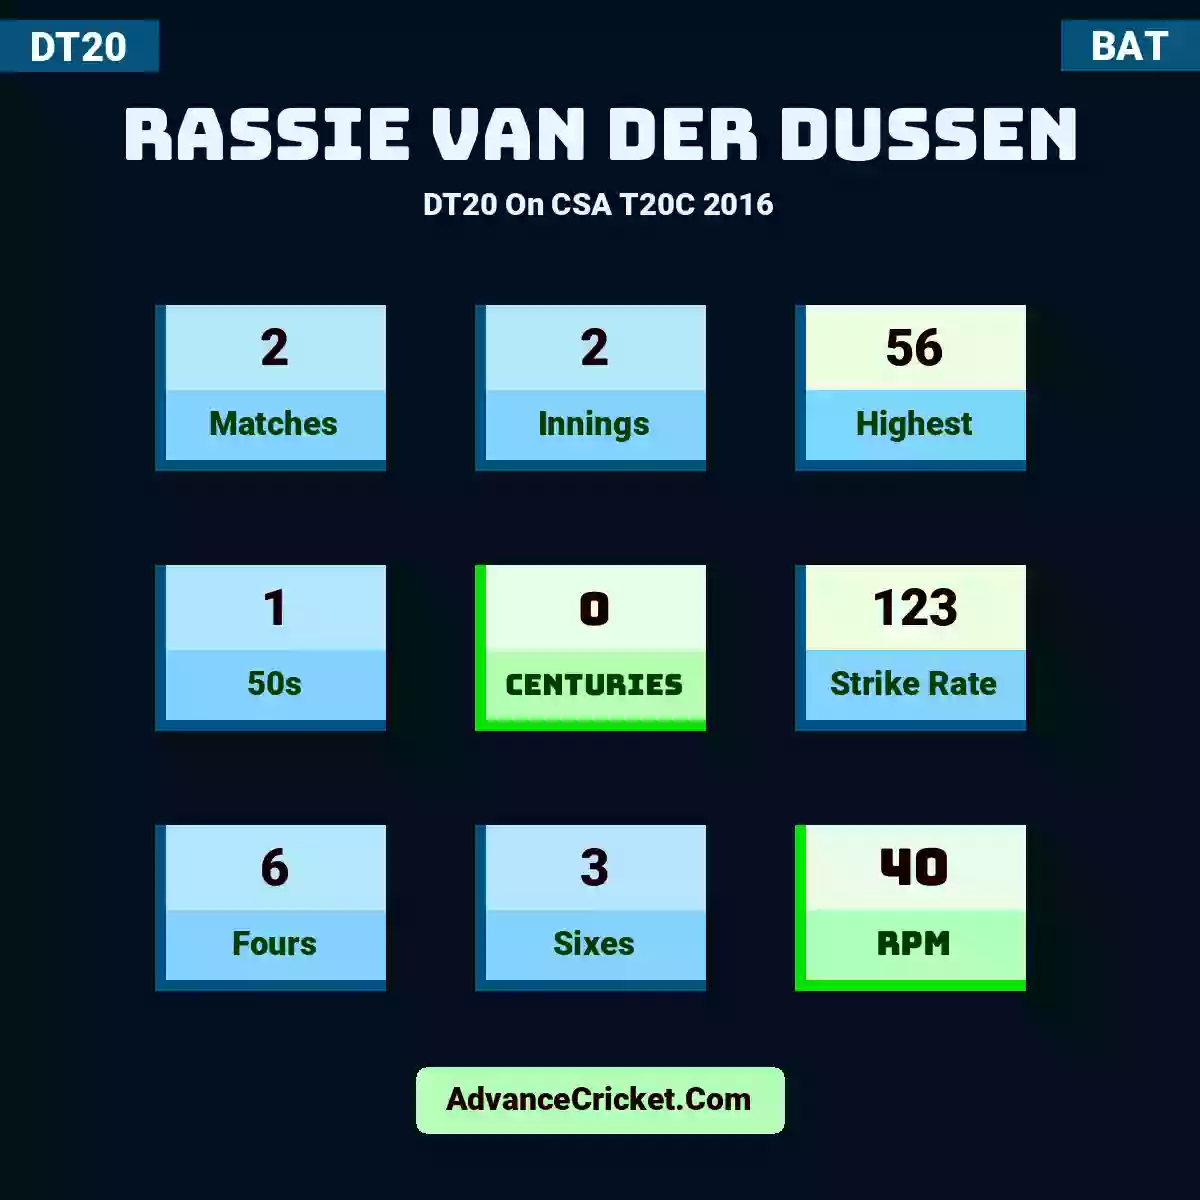 Rassie van der Dussen DT20  On CSA T20C 2016, Rassie van der Dussen played 2 matches, scored 56 runs as highest, 1 half-centuries, and 0 centuries, with a strike rate of 123. R.Dussen hit 6 fours and 3 sixes, with an RPM of 40.